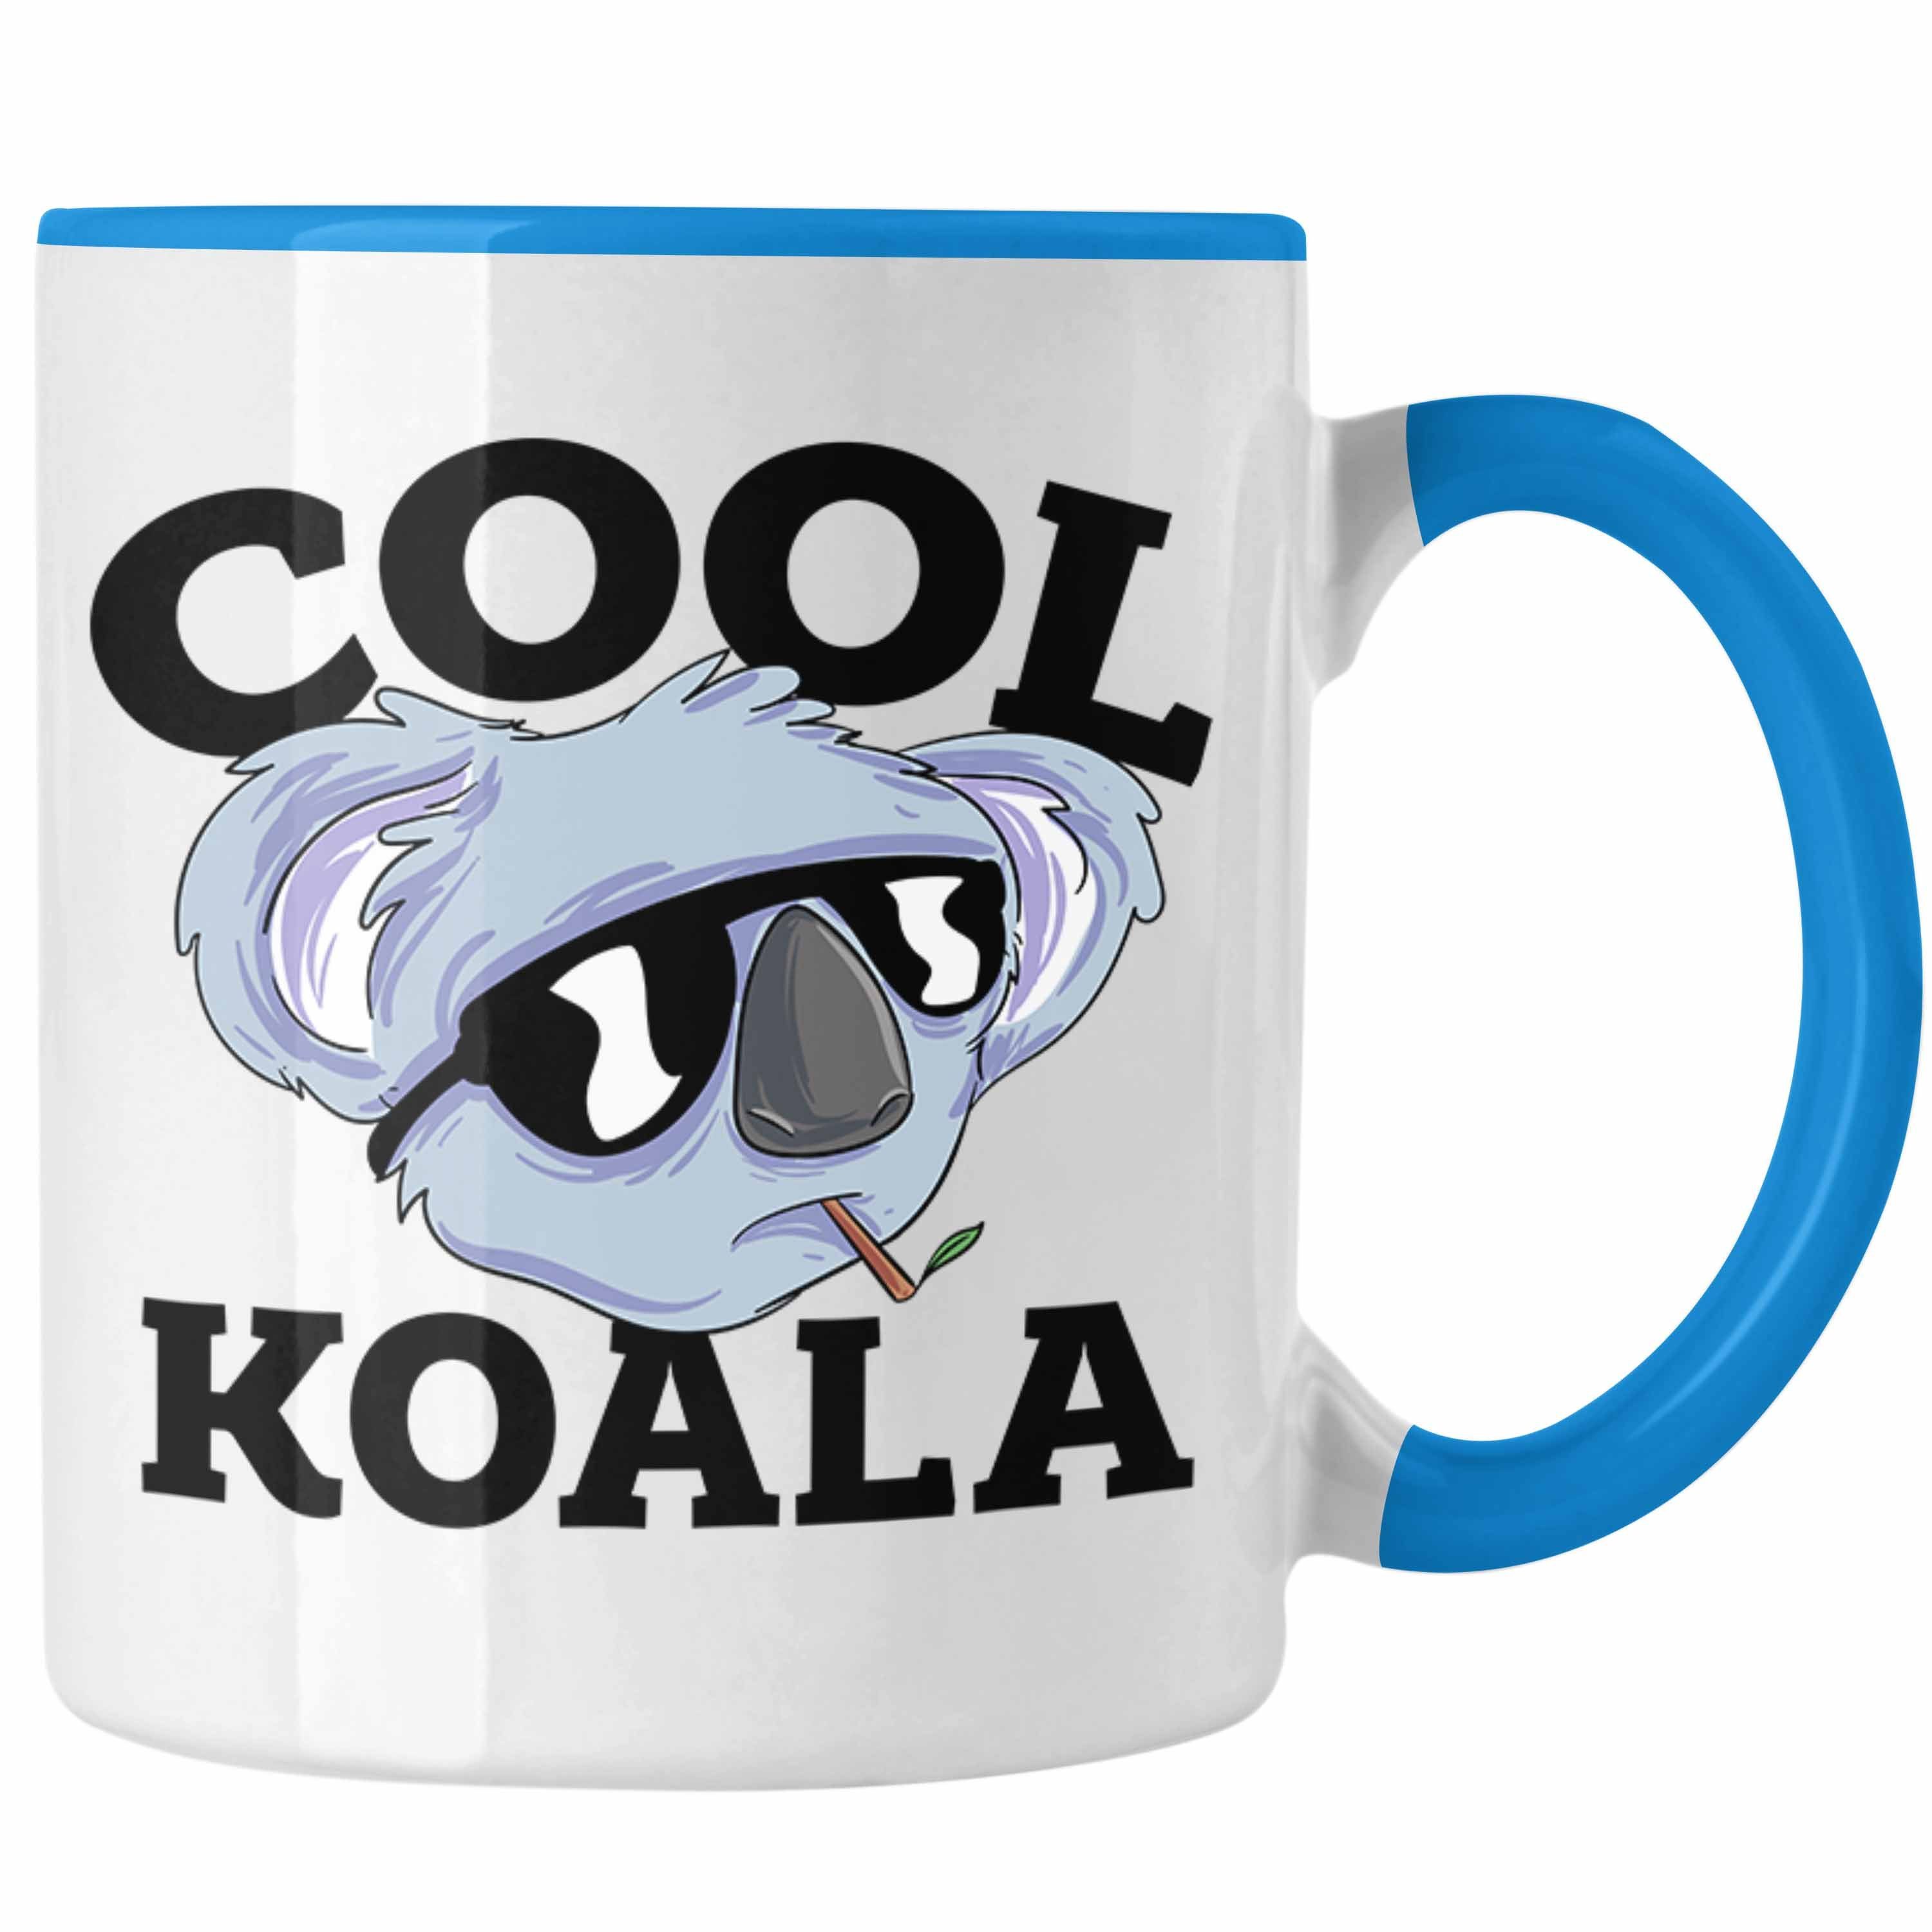 Trendation Tasse Tasse Koala Geschenkidee für Koala-Liebhaber Tasse Koala-Aufdruck Blau